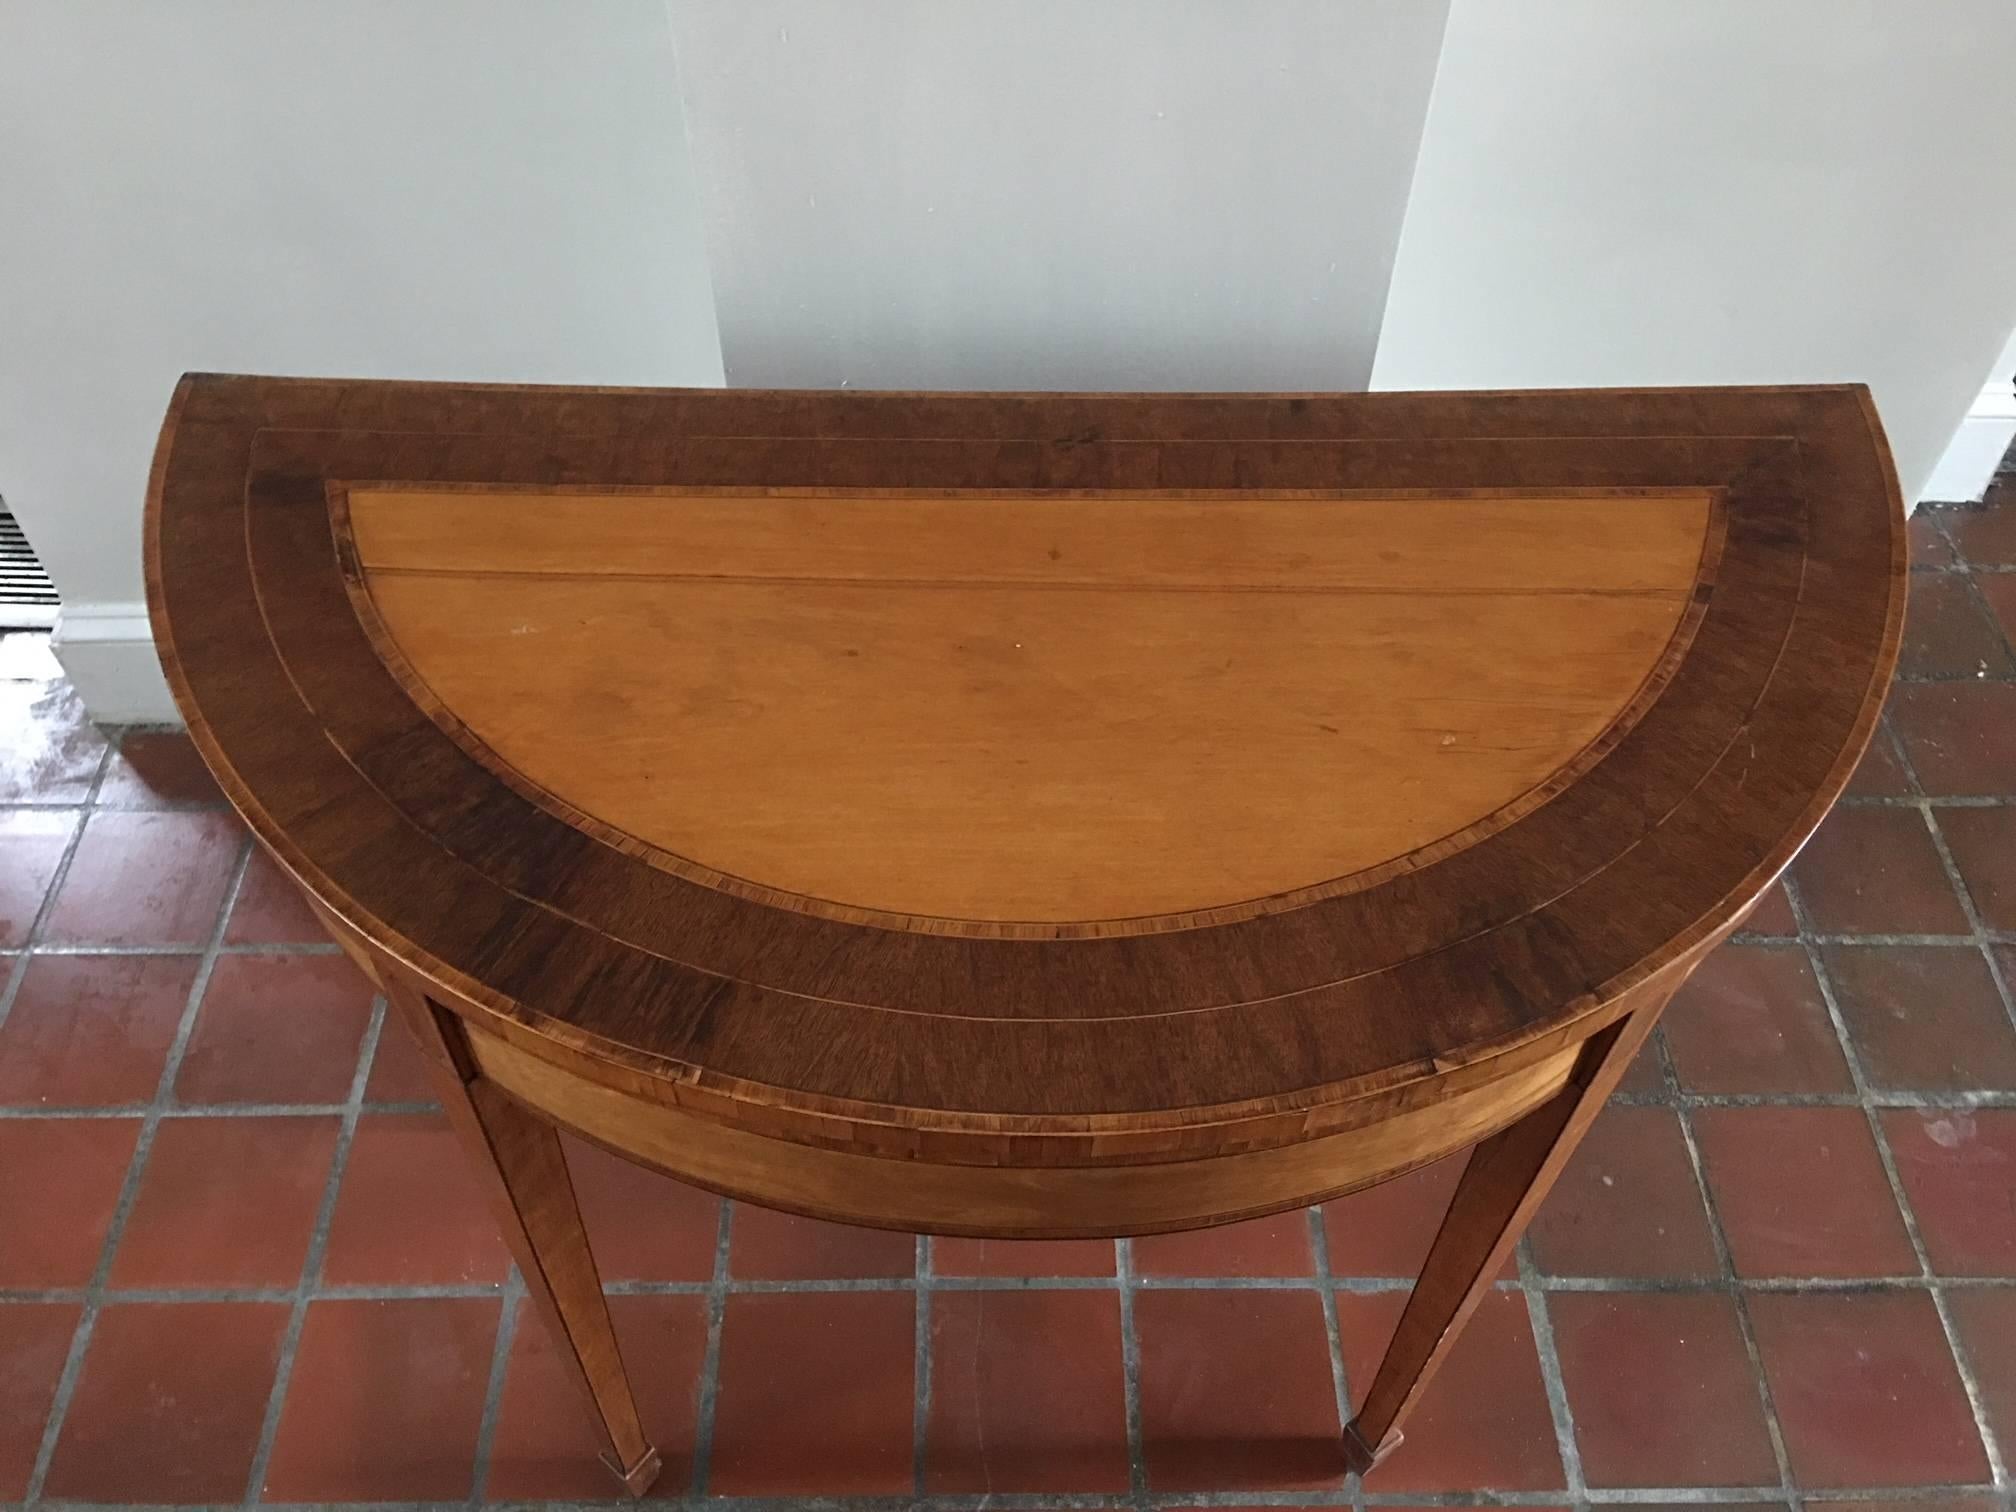 Irish Satinwood and mahogany games table with leather top, 19th century. Marlboro feet and window pane inlay.
  